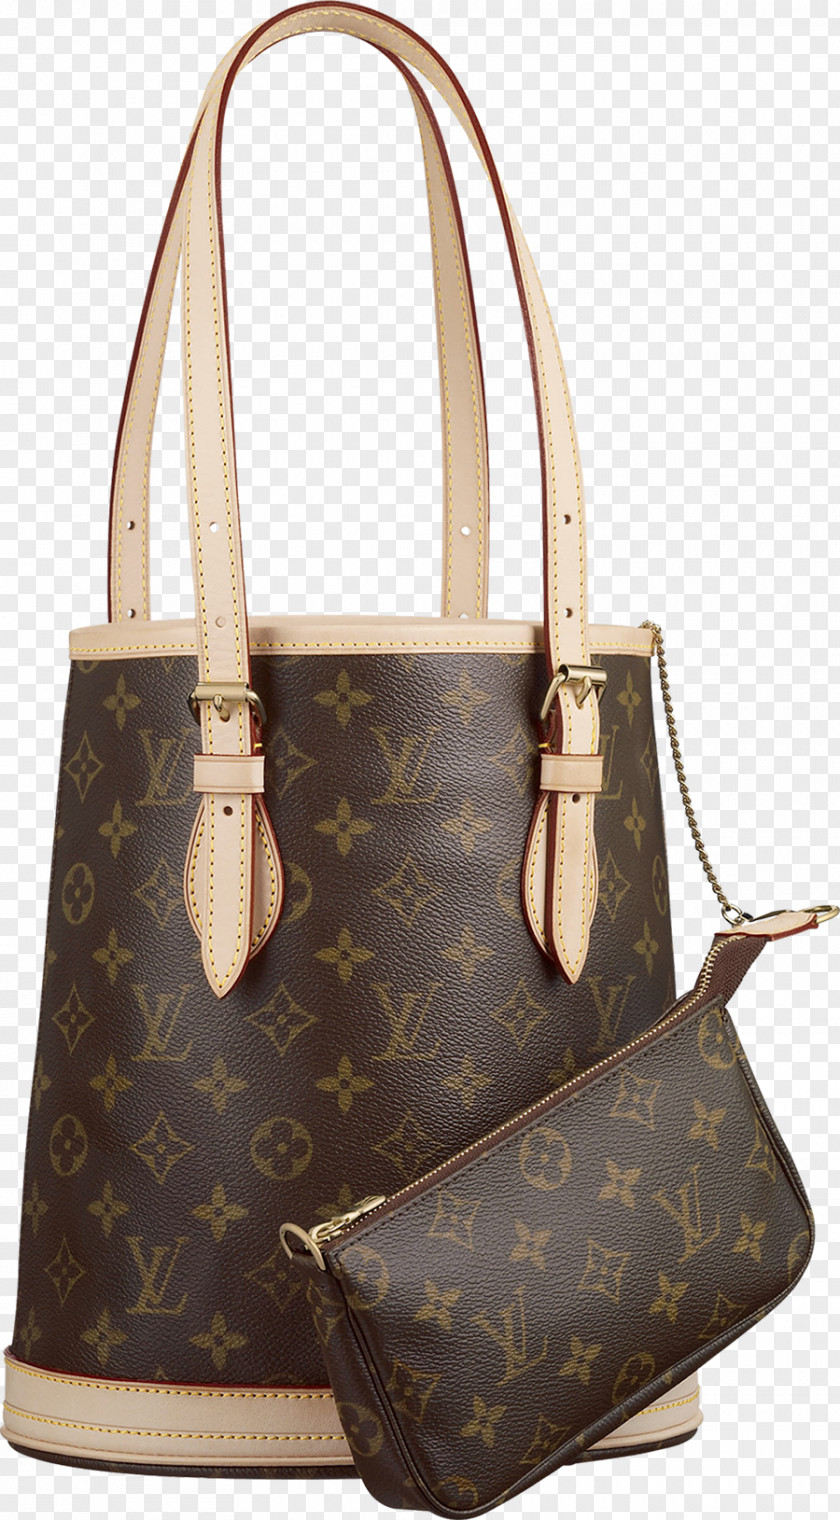 Chanel Louis Vuitton Handbag Monogram PNG